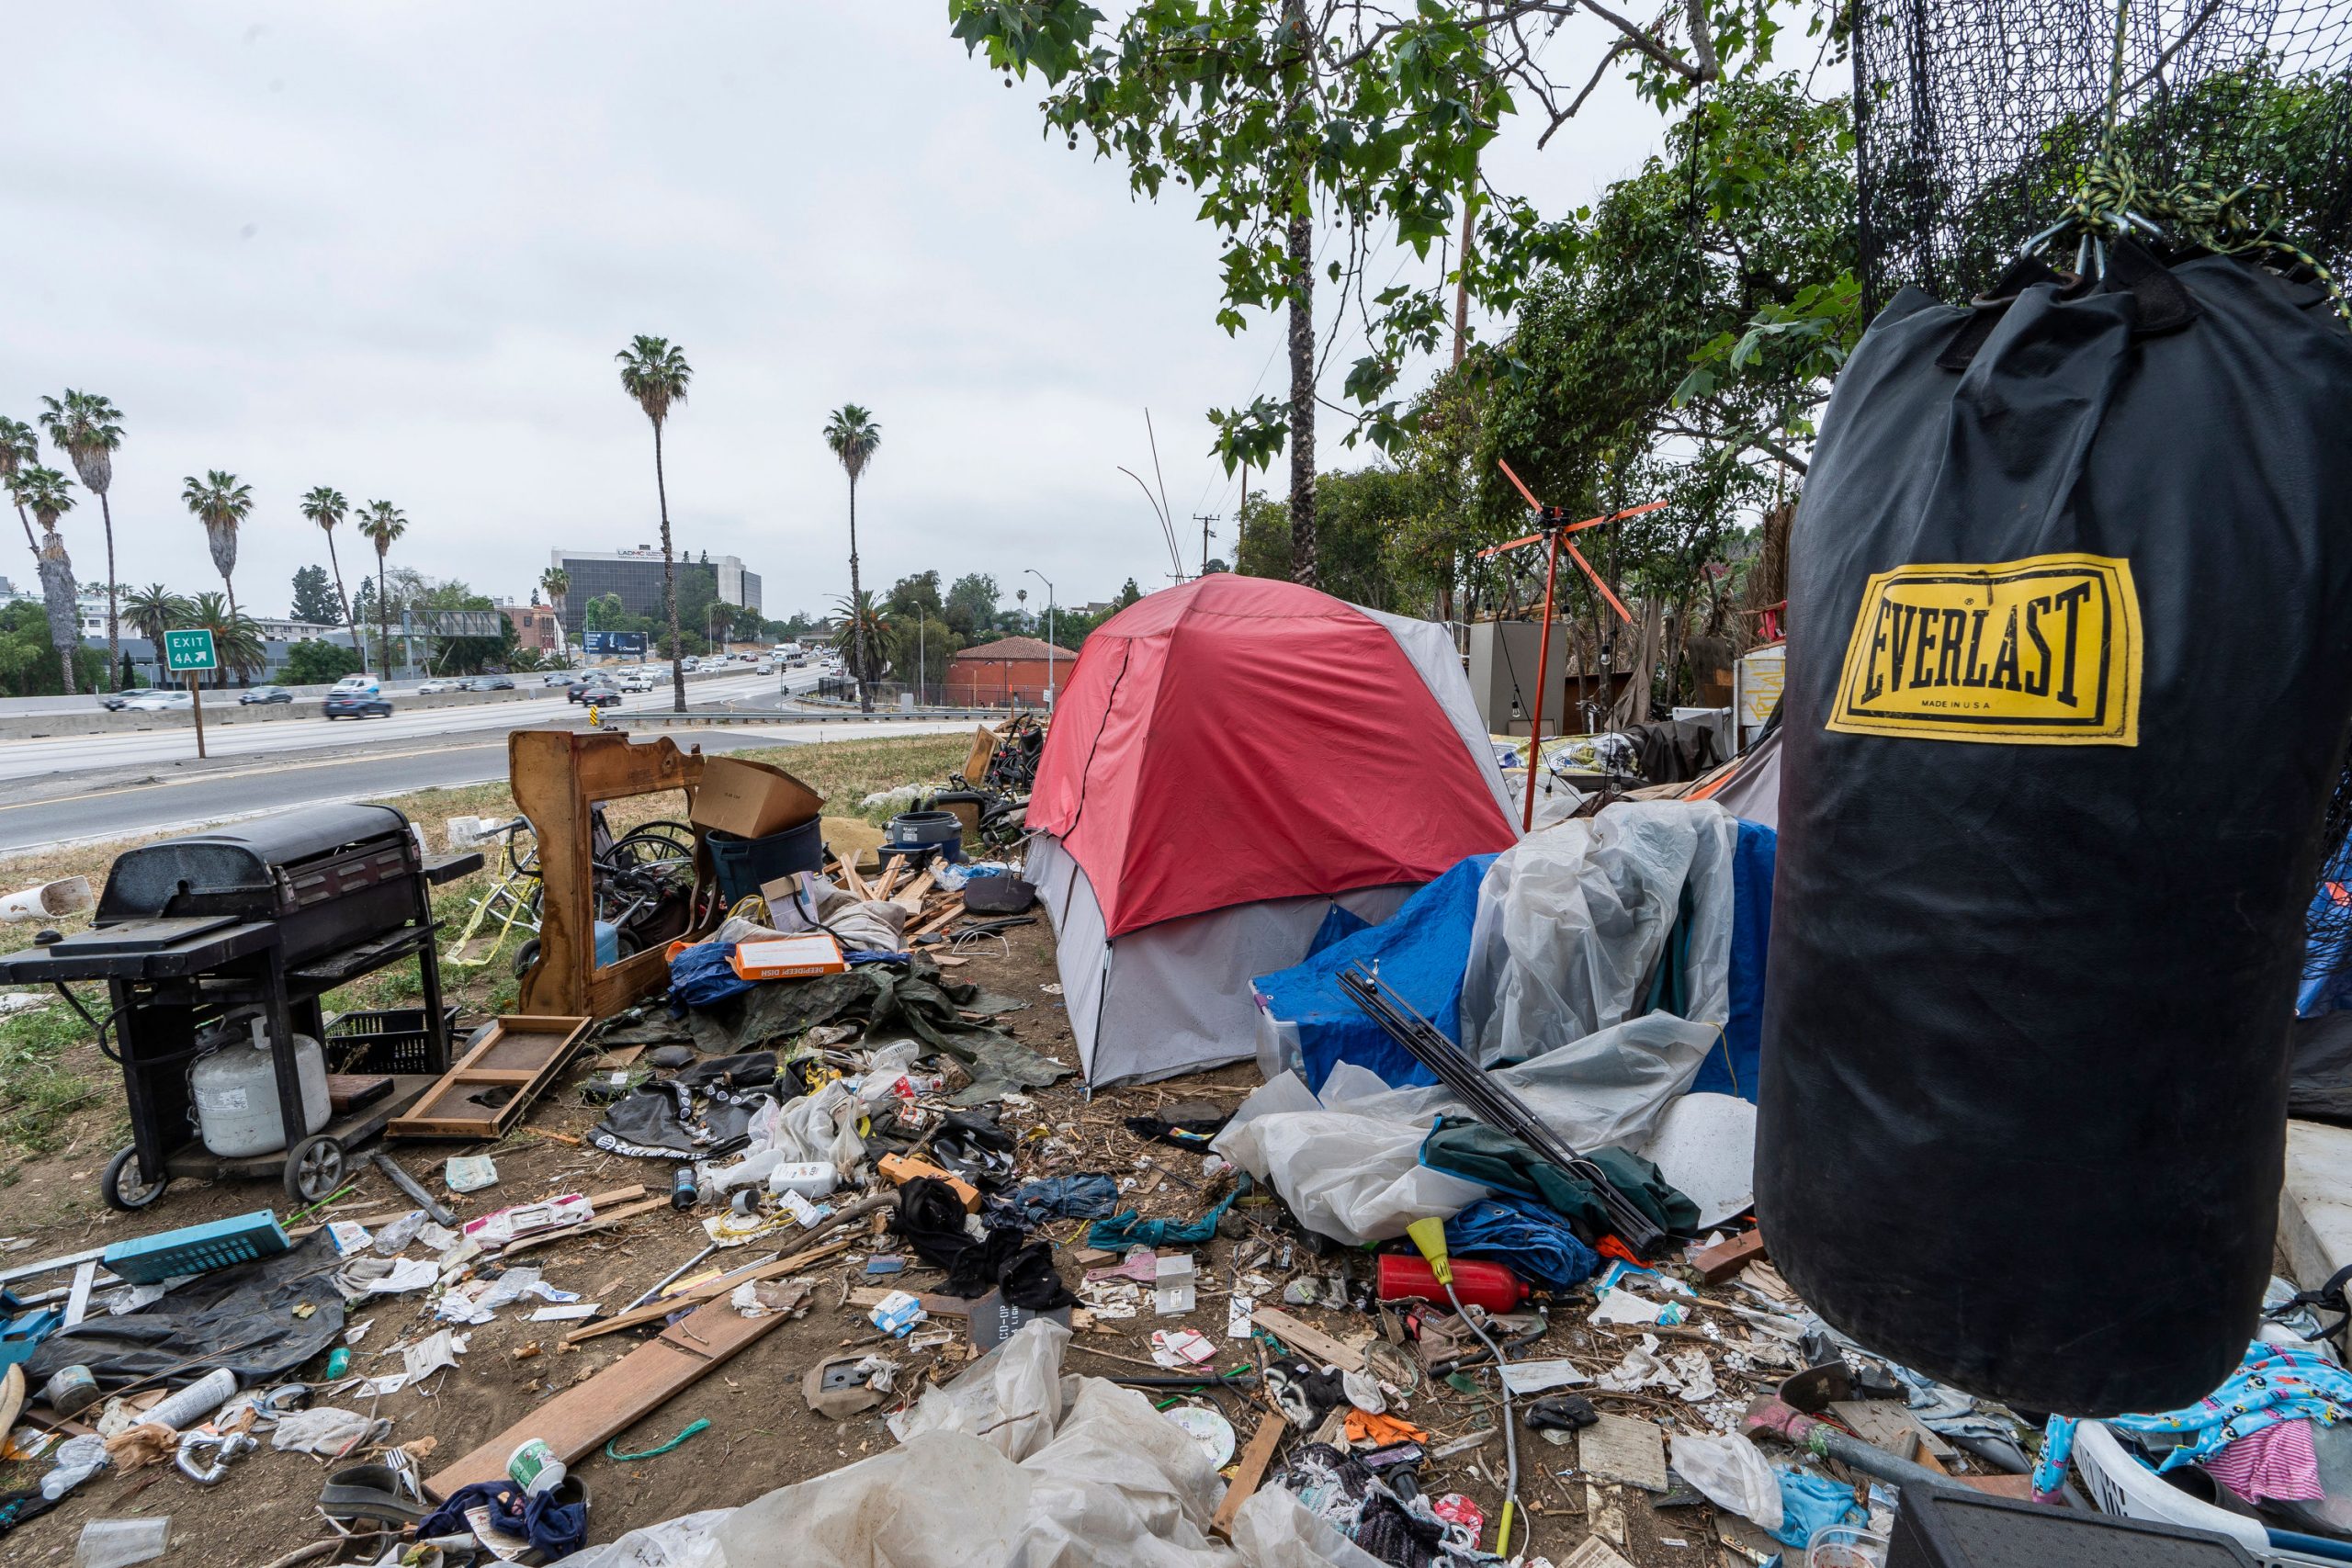 Crime, homelessness frame race for mayor of Los Angeles